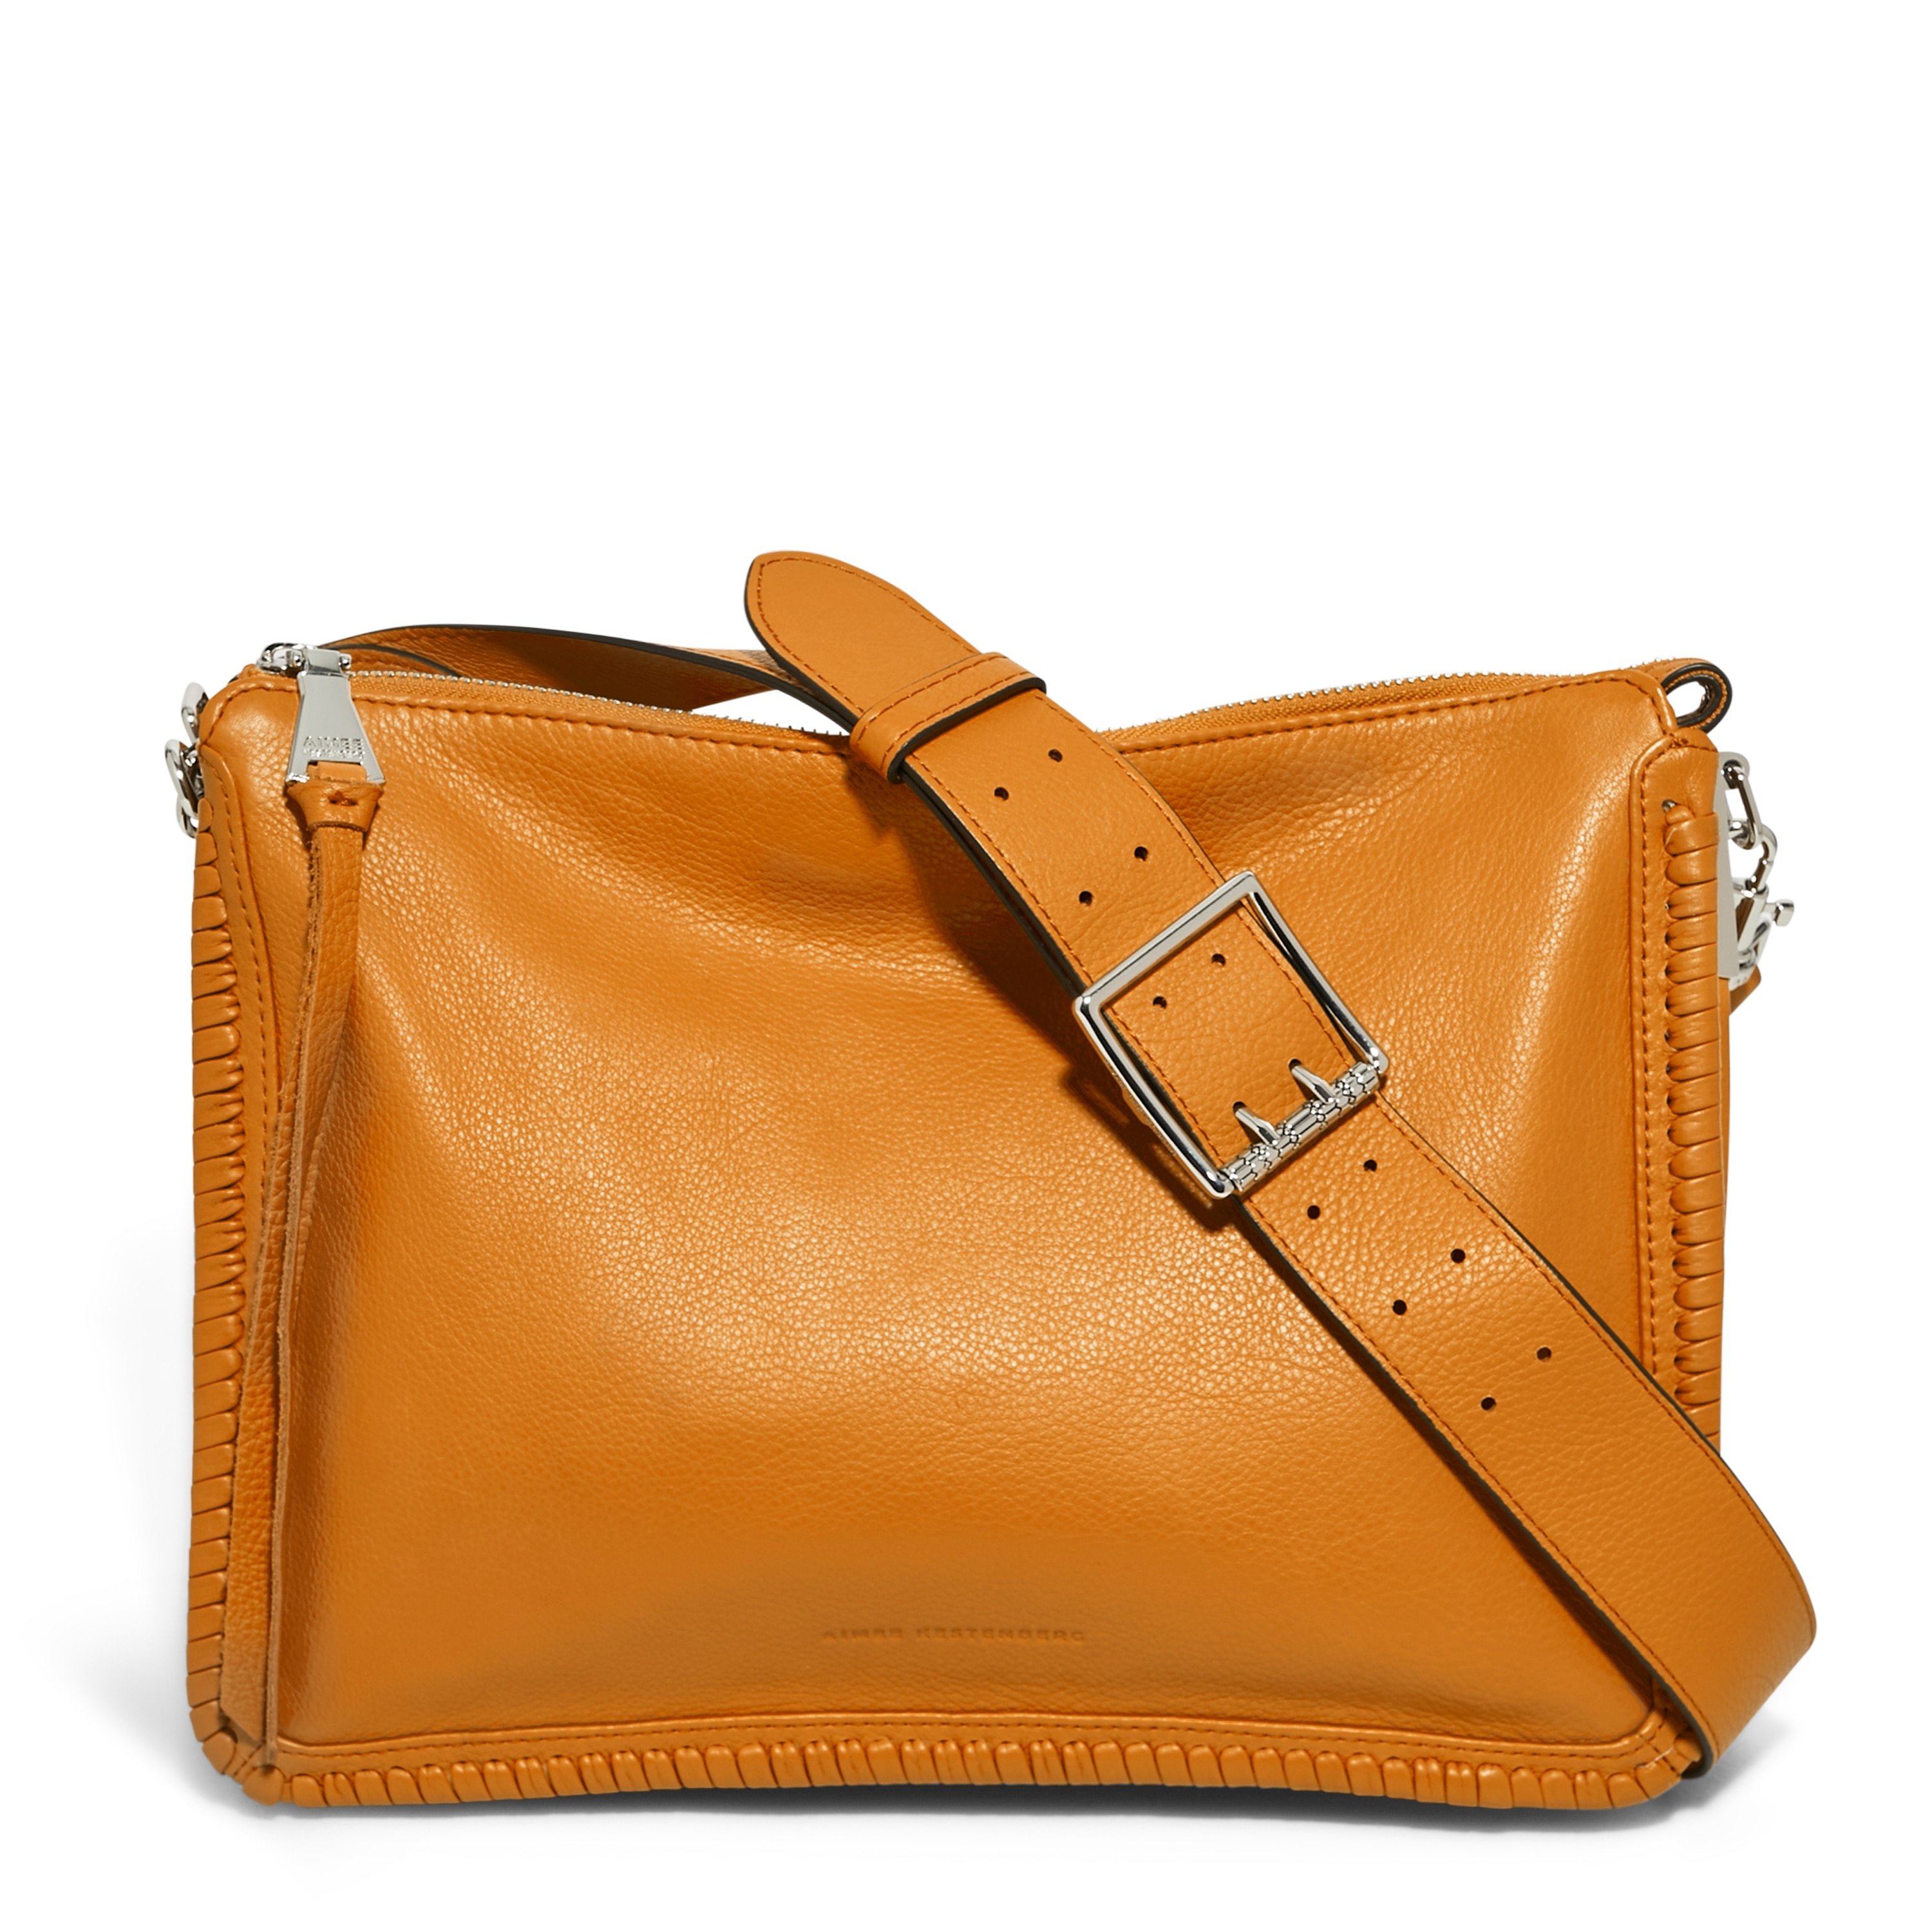 Aimee Kestenberg original leather crossbody purse forest green medium size  | eBay